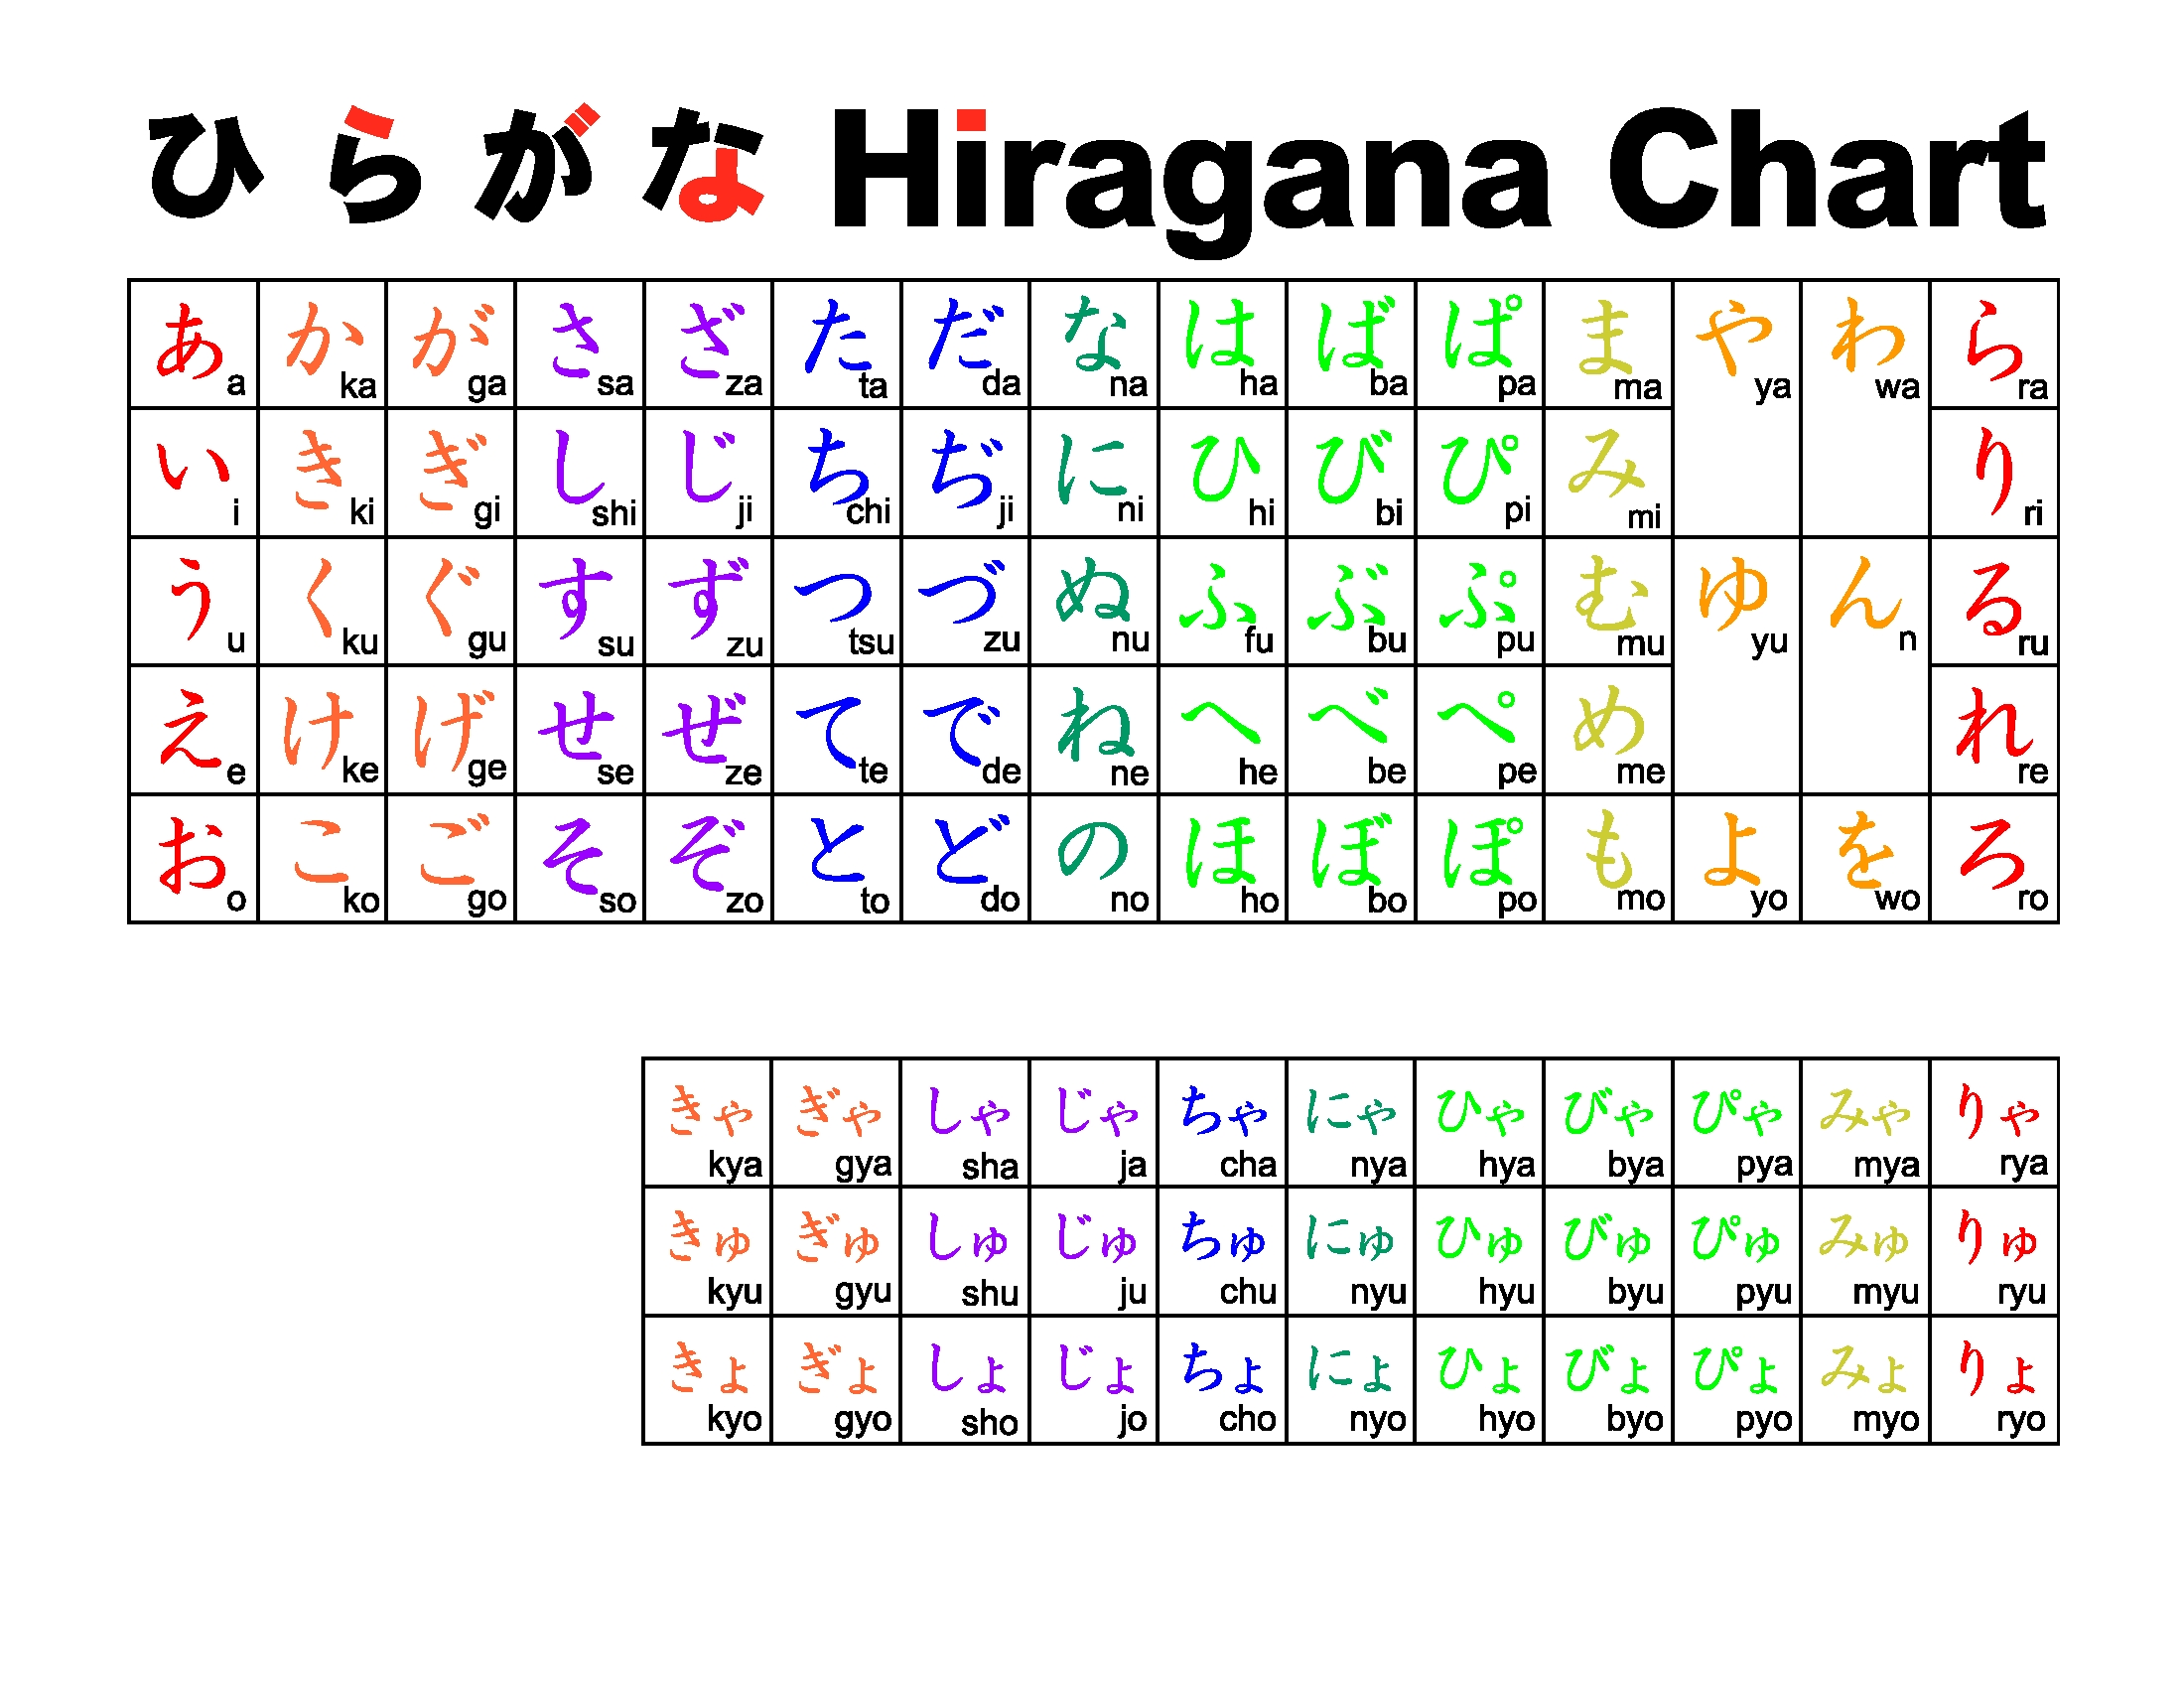 The Ultimate Guide to Japanese Writing Systems: Learning to Read Hiragana, Katakana and Kanji